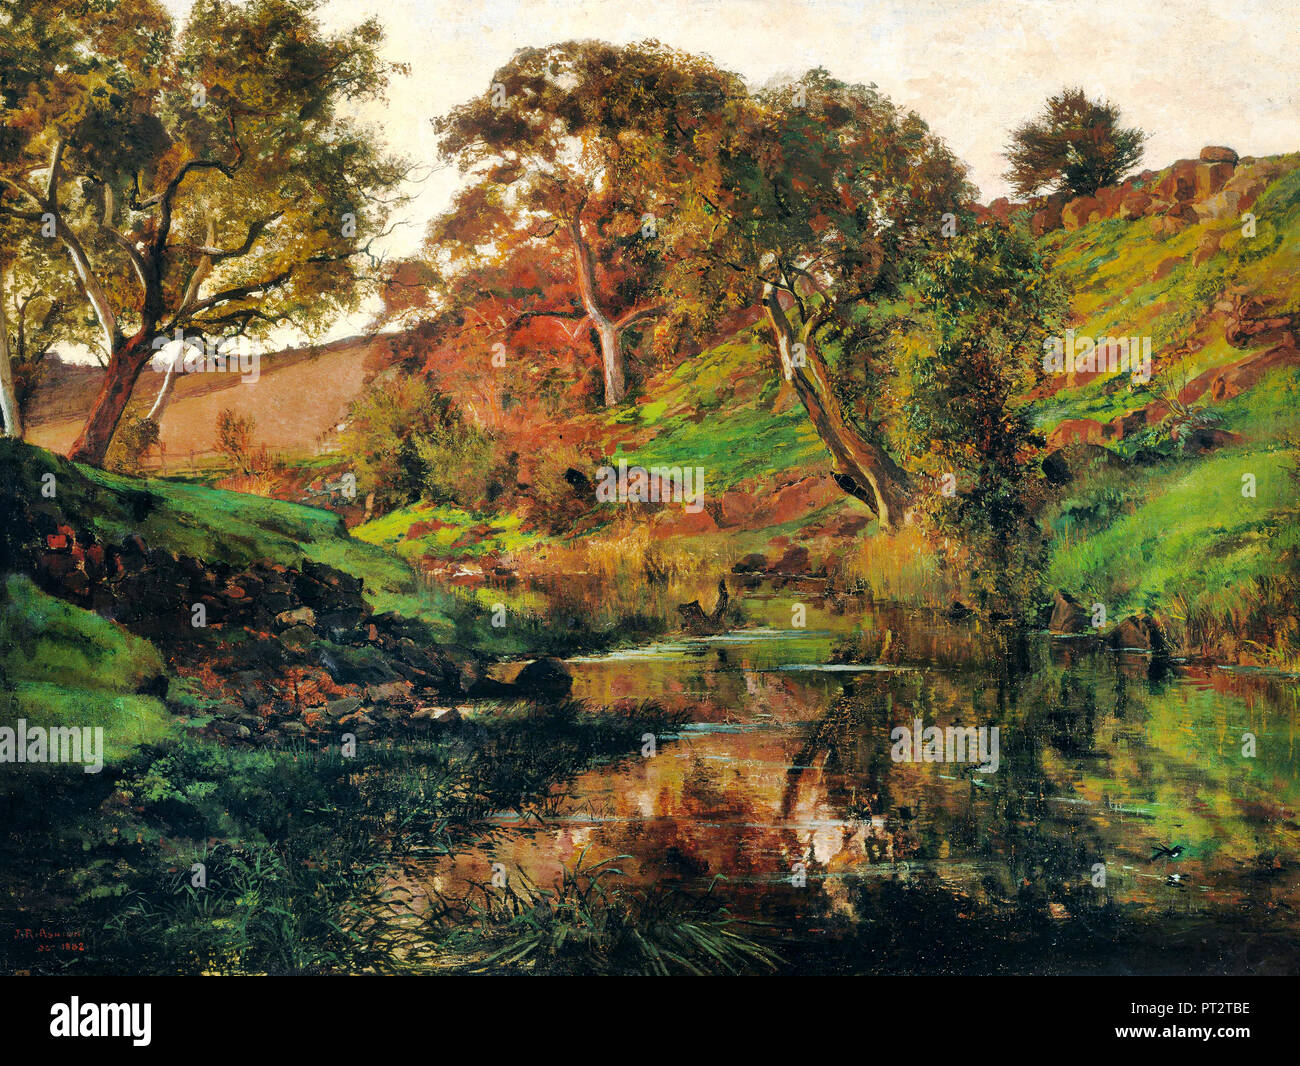 Julian Ashton, Evening, Merri Creek 1882 Oil on canvas, Art Gallery of New South Wales, Australia. Stock Photo